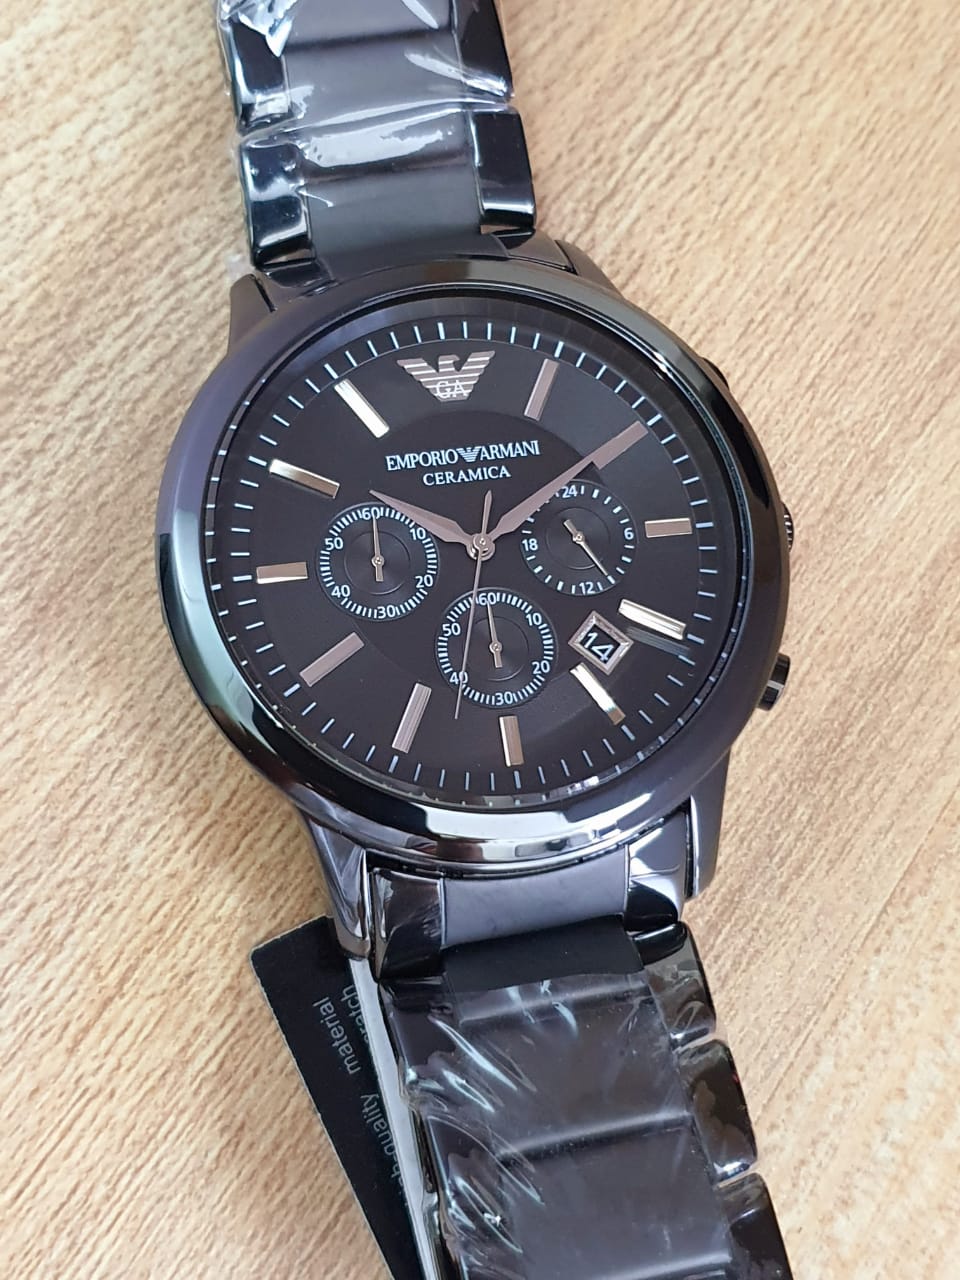 Buy Emporio Armani Ceramica Black Dial Chronograph Quartz Watch for Gents - Emporio Armani AR1451 in Pakistan